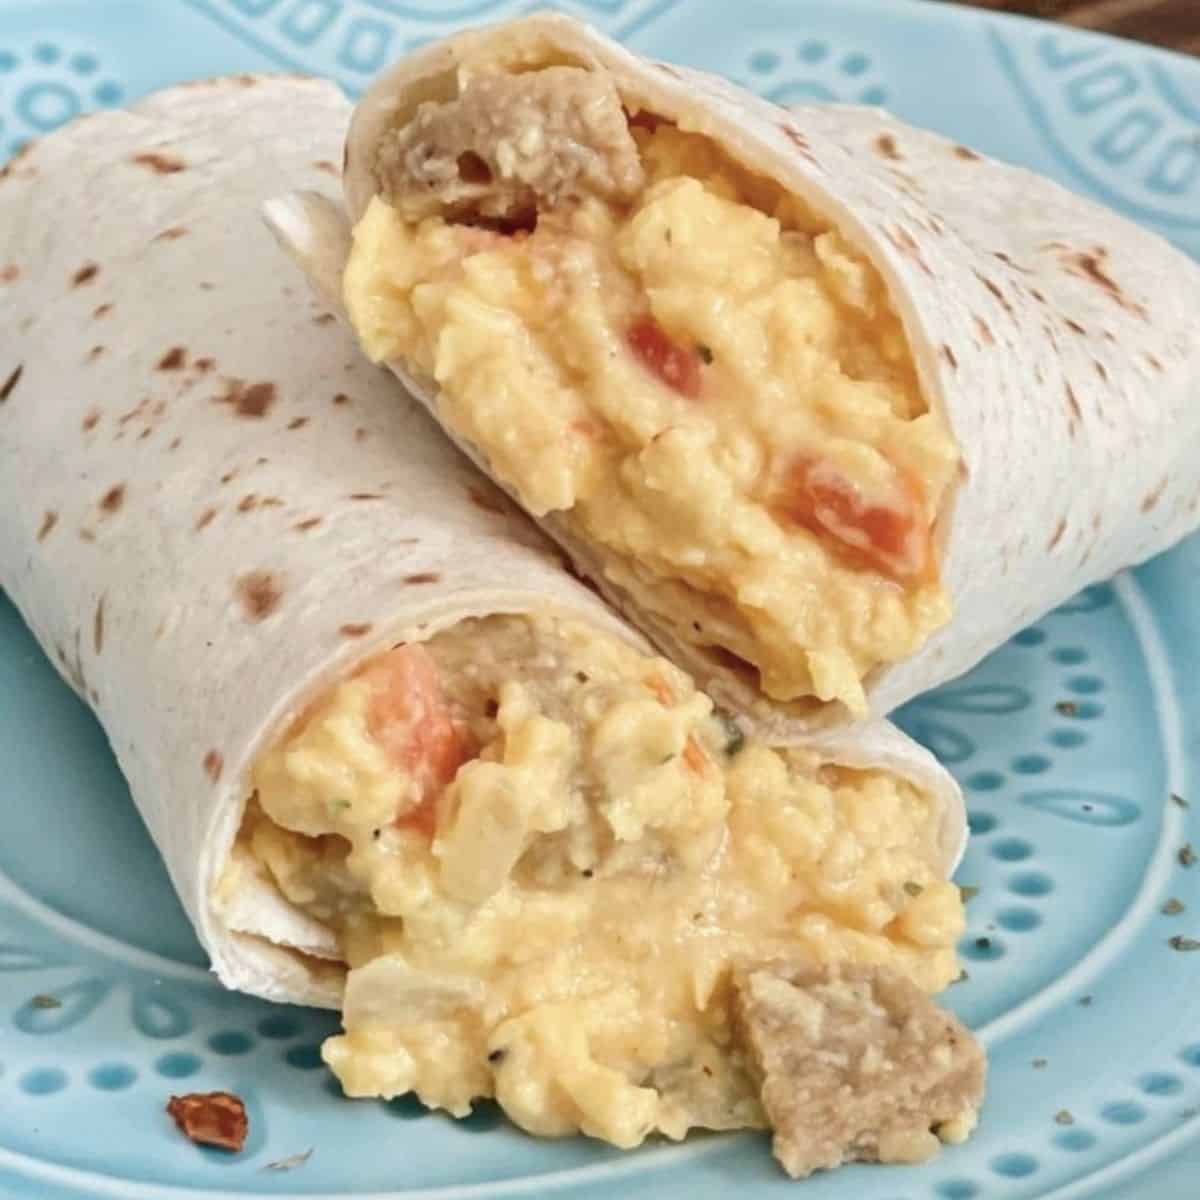 Vegan breakfast burrito. 